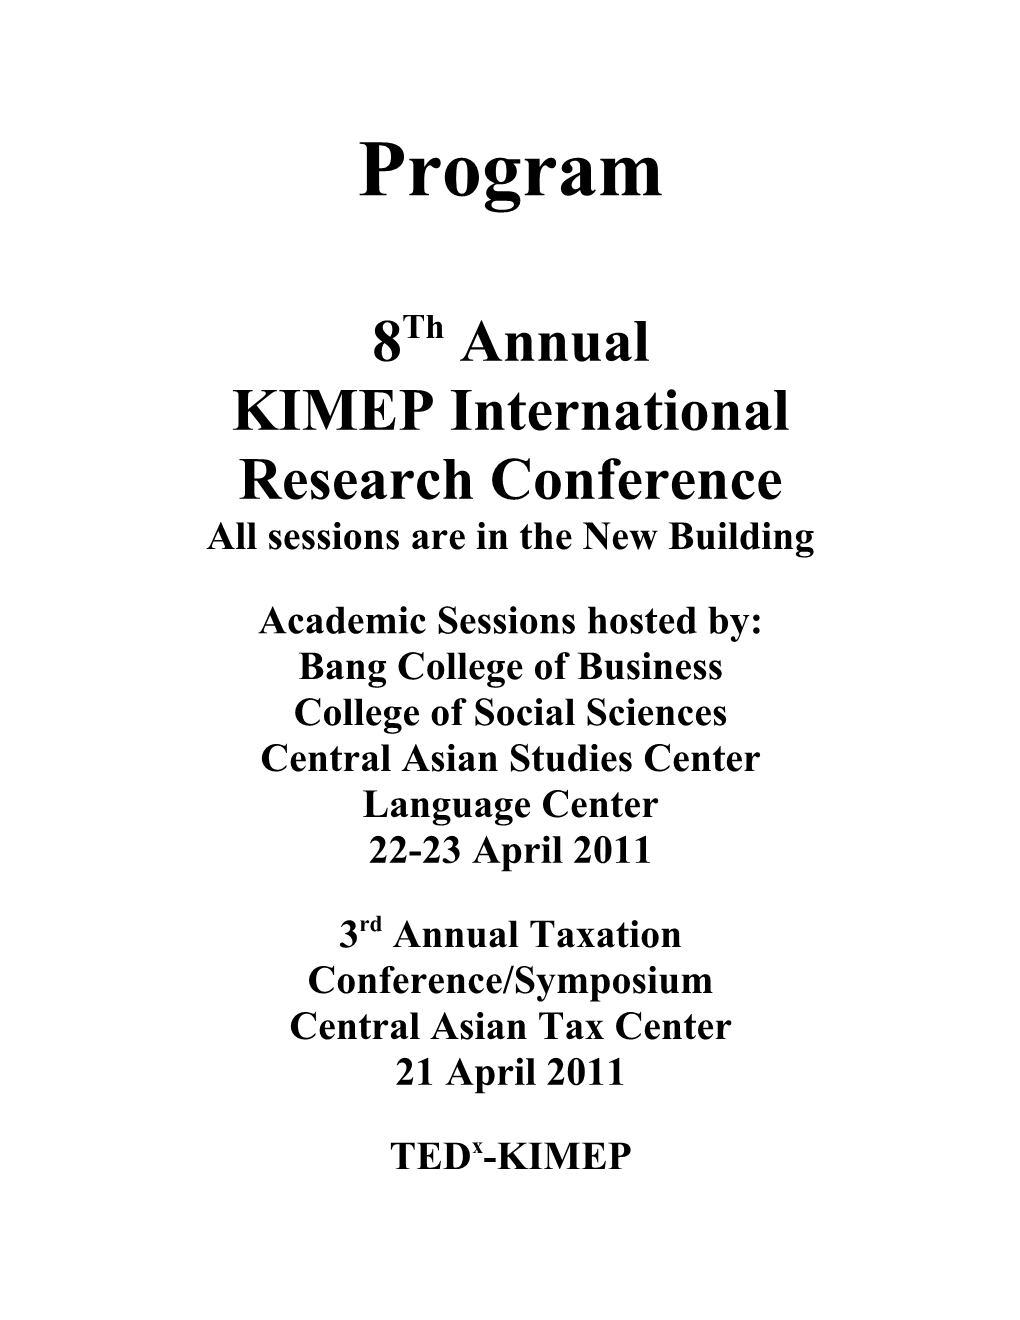 KIMEP International